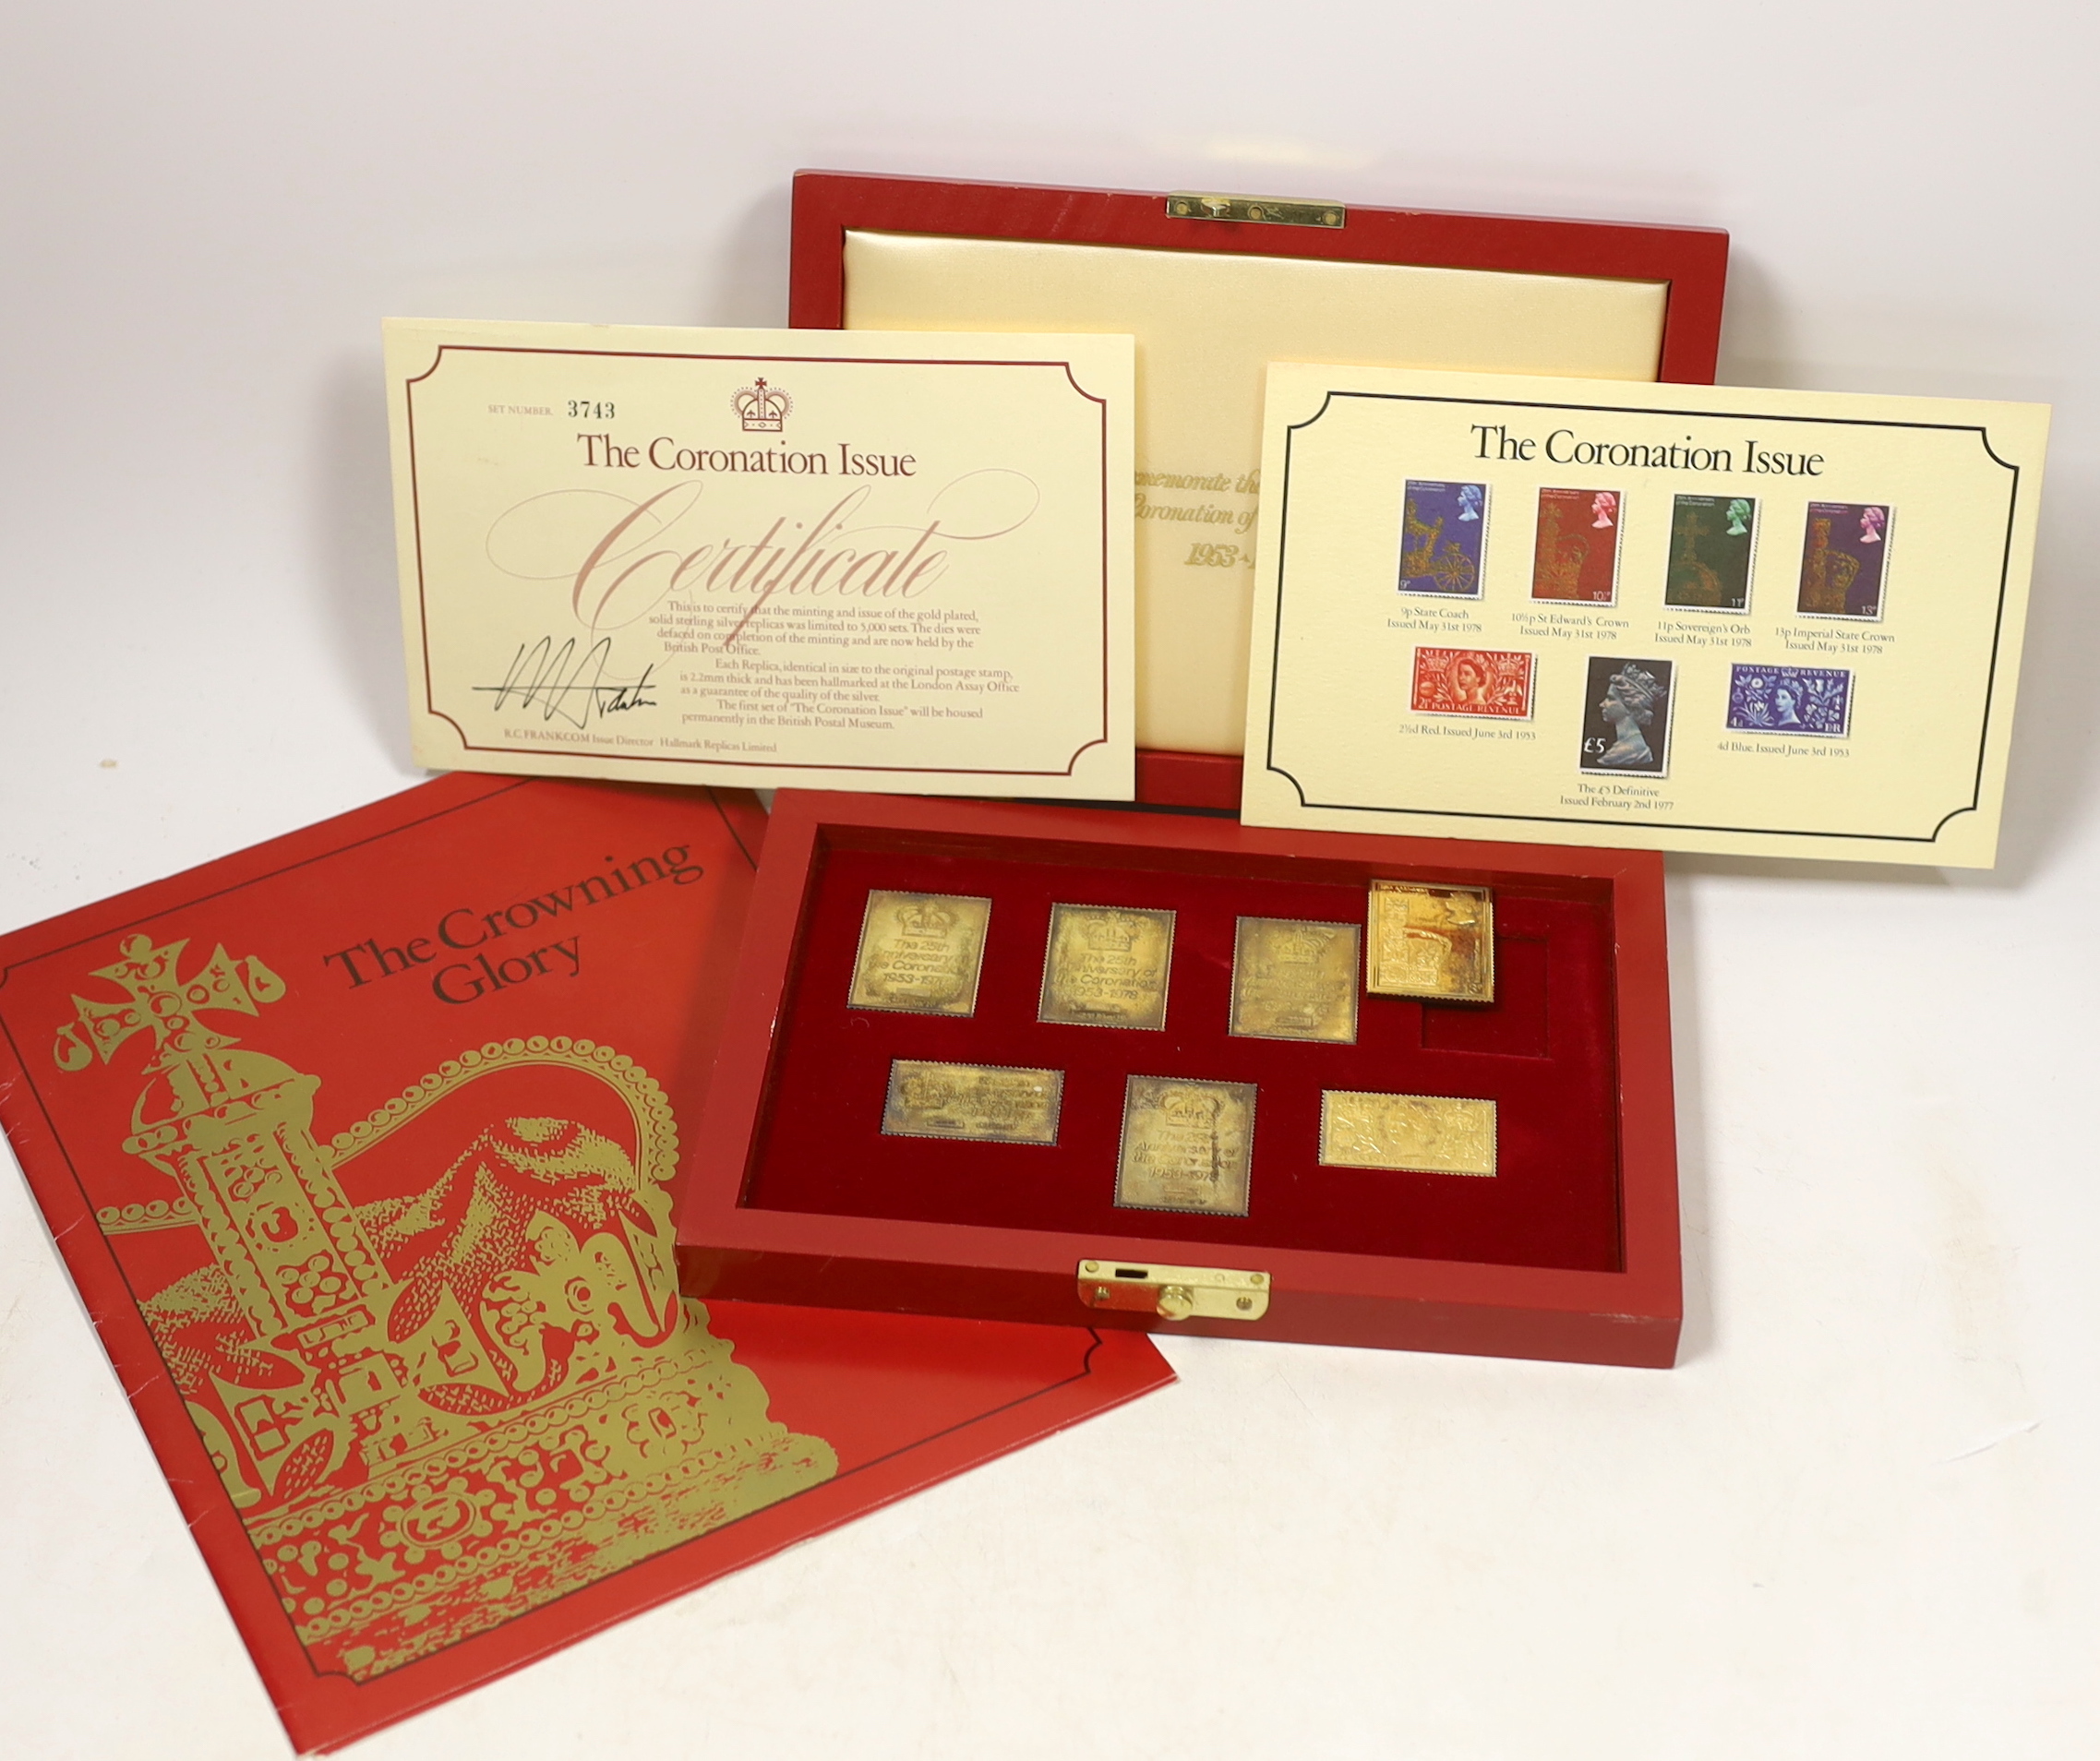 Hallmark Replicas Ltd. silver gilt Coronation issue stamp replicas, cased                                                                                                                                                   